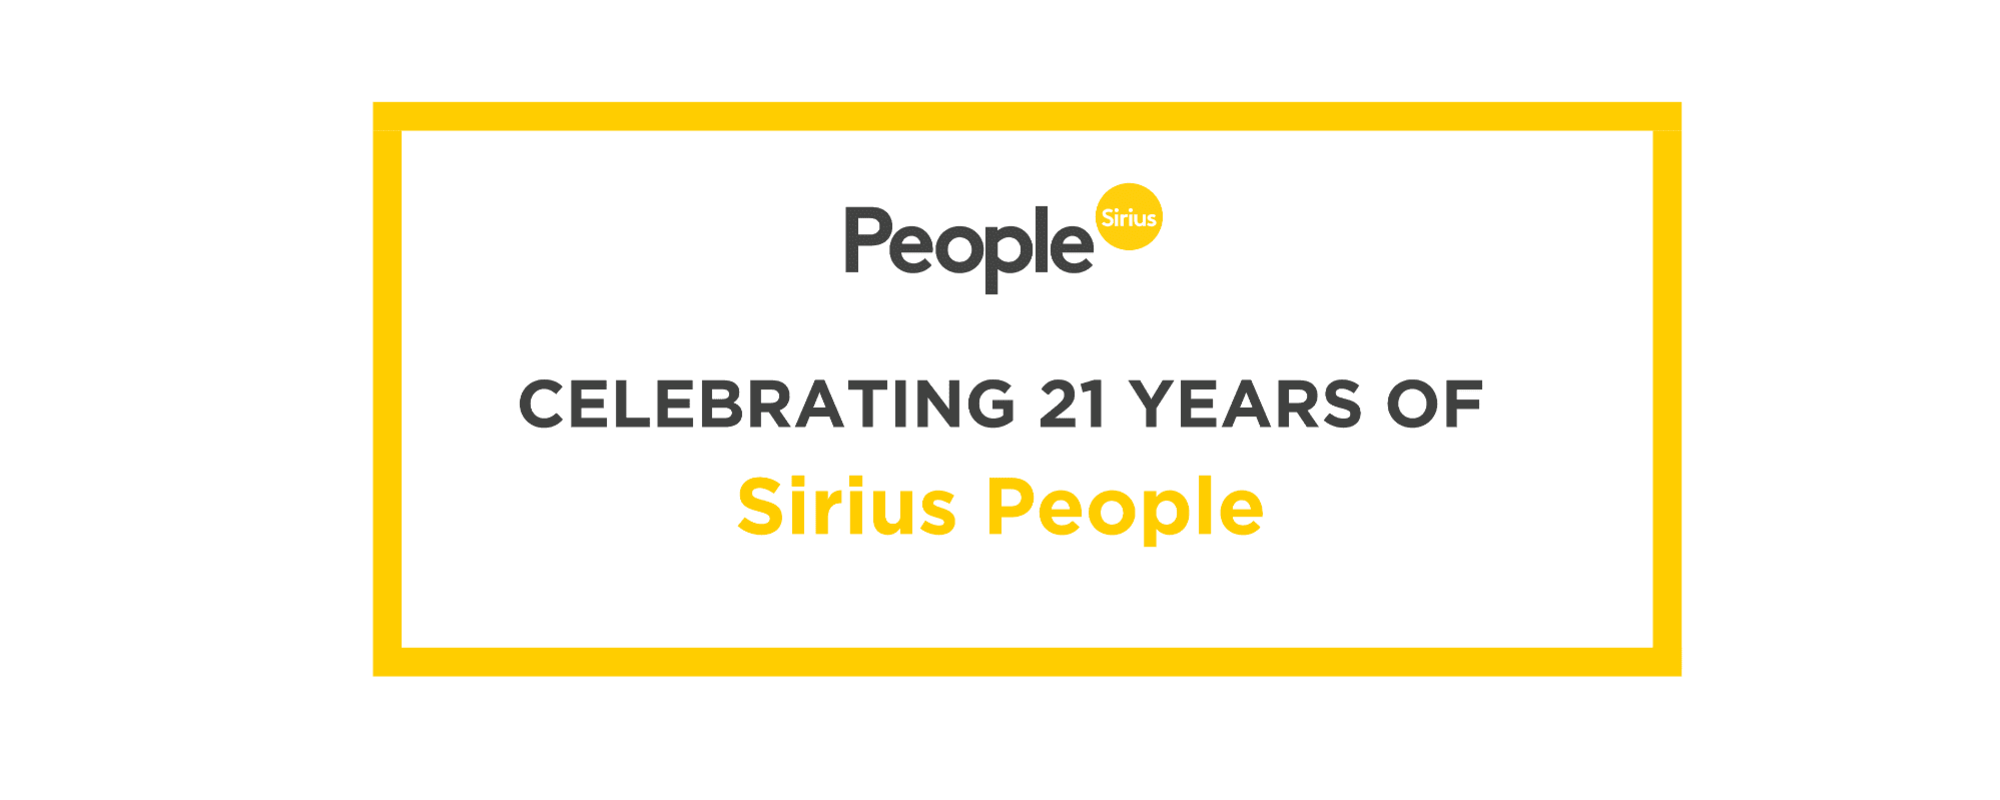 Sirus People 21 year anniversary banner